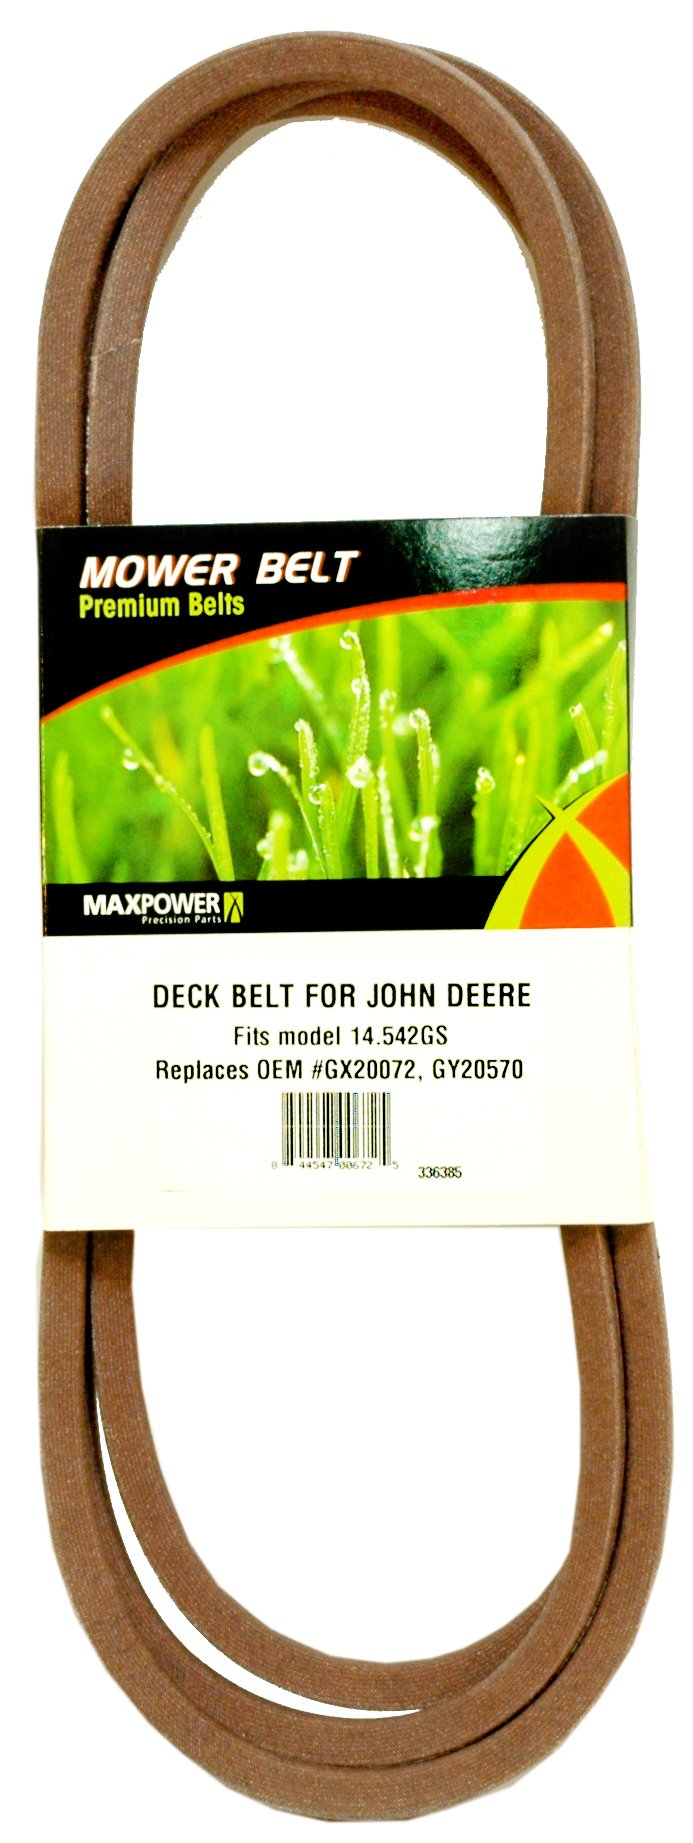 Maxpower 336385 Mower Belt for John Deere Models GS20072, GY20570